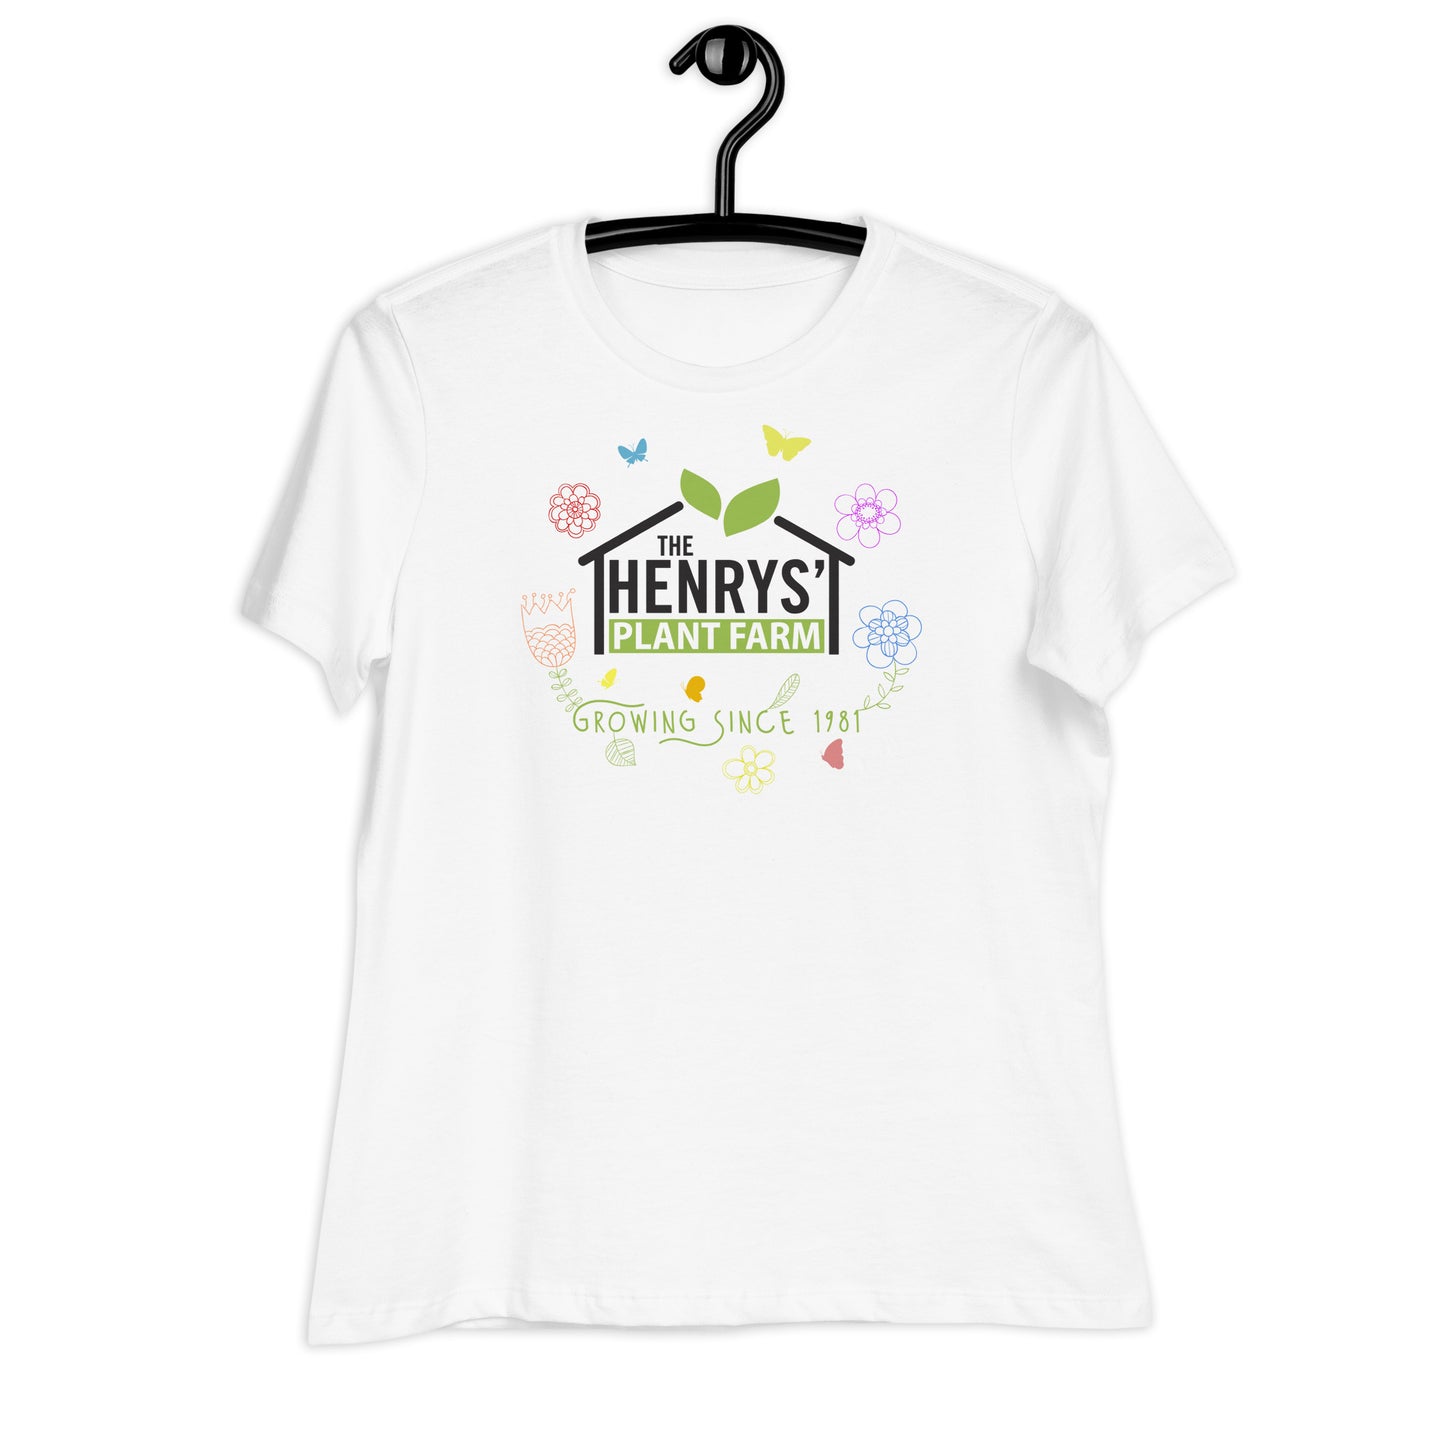 The Henrys' Plant Farm Growing Since 1981 - Women's T-Shirt